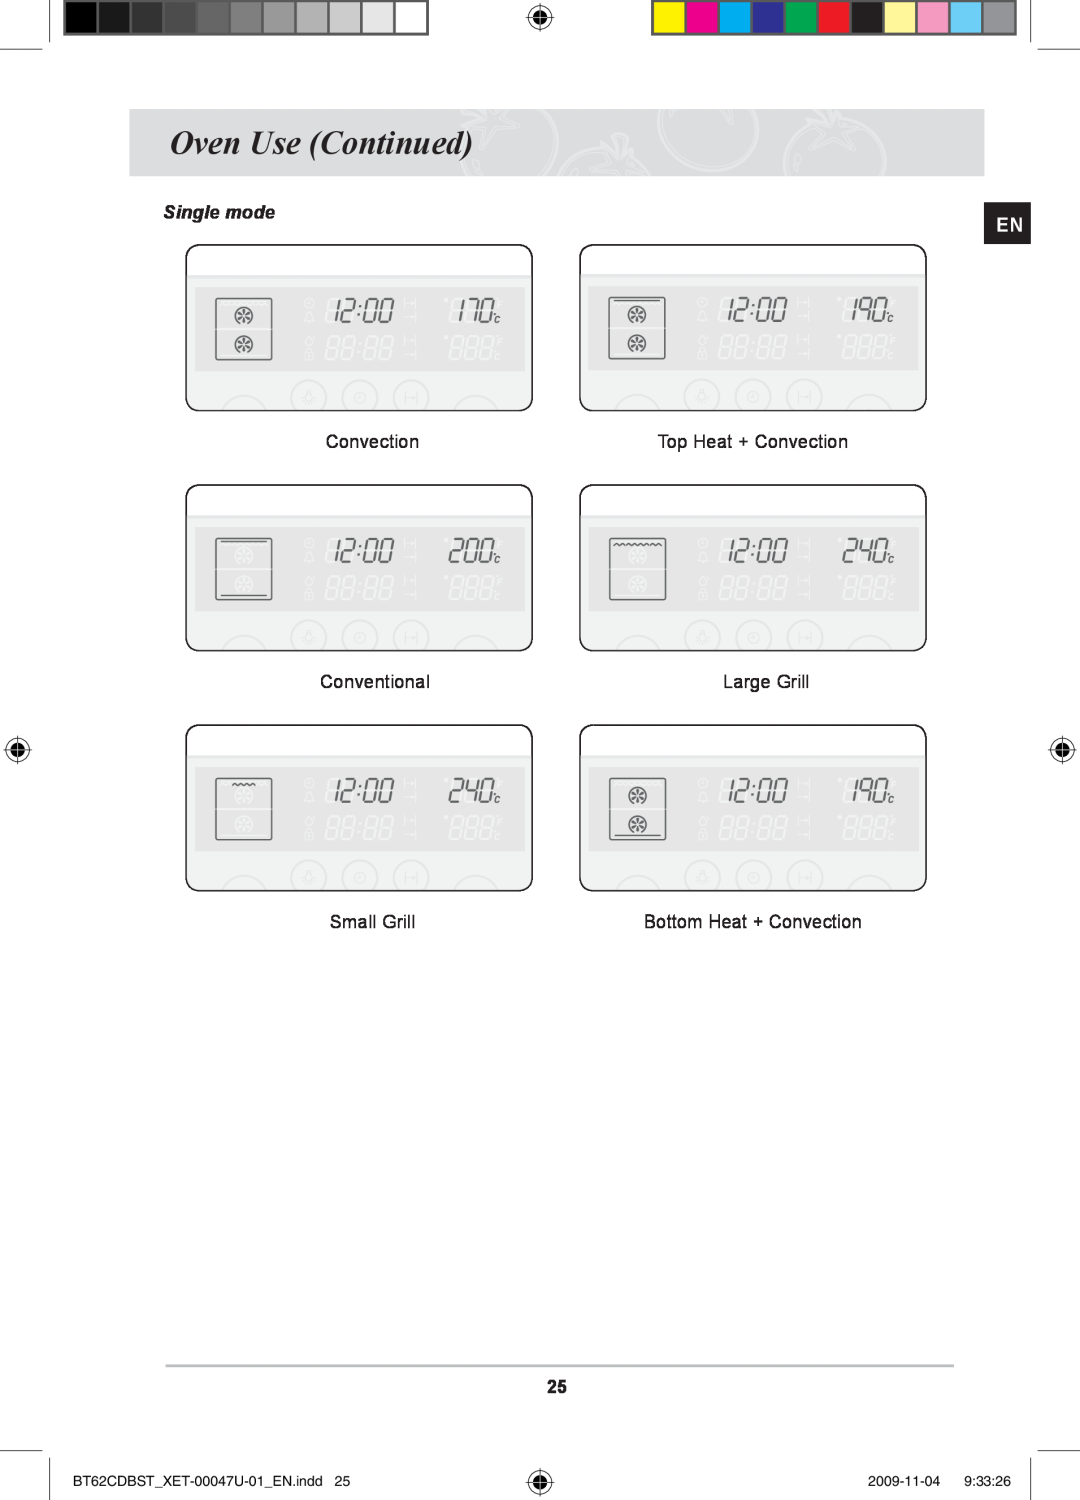 Samsung BT62CDBST/XET manual Single mode, Oven Use Continued, BT62CDBSTXET-00047U-01EN.indd, 2009-11-04 